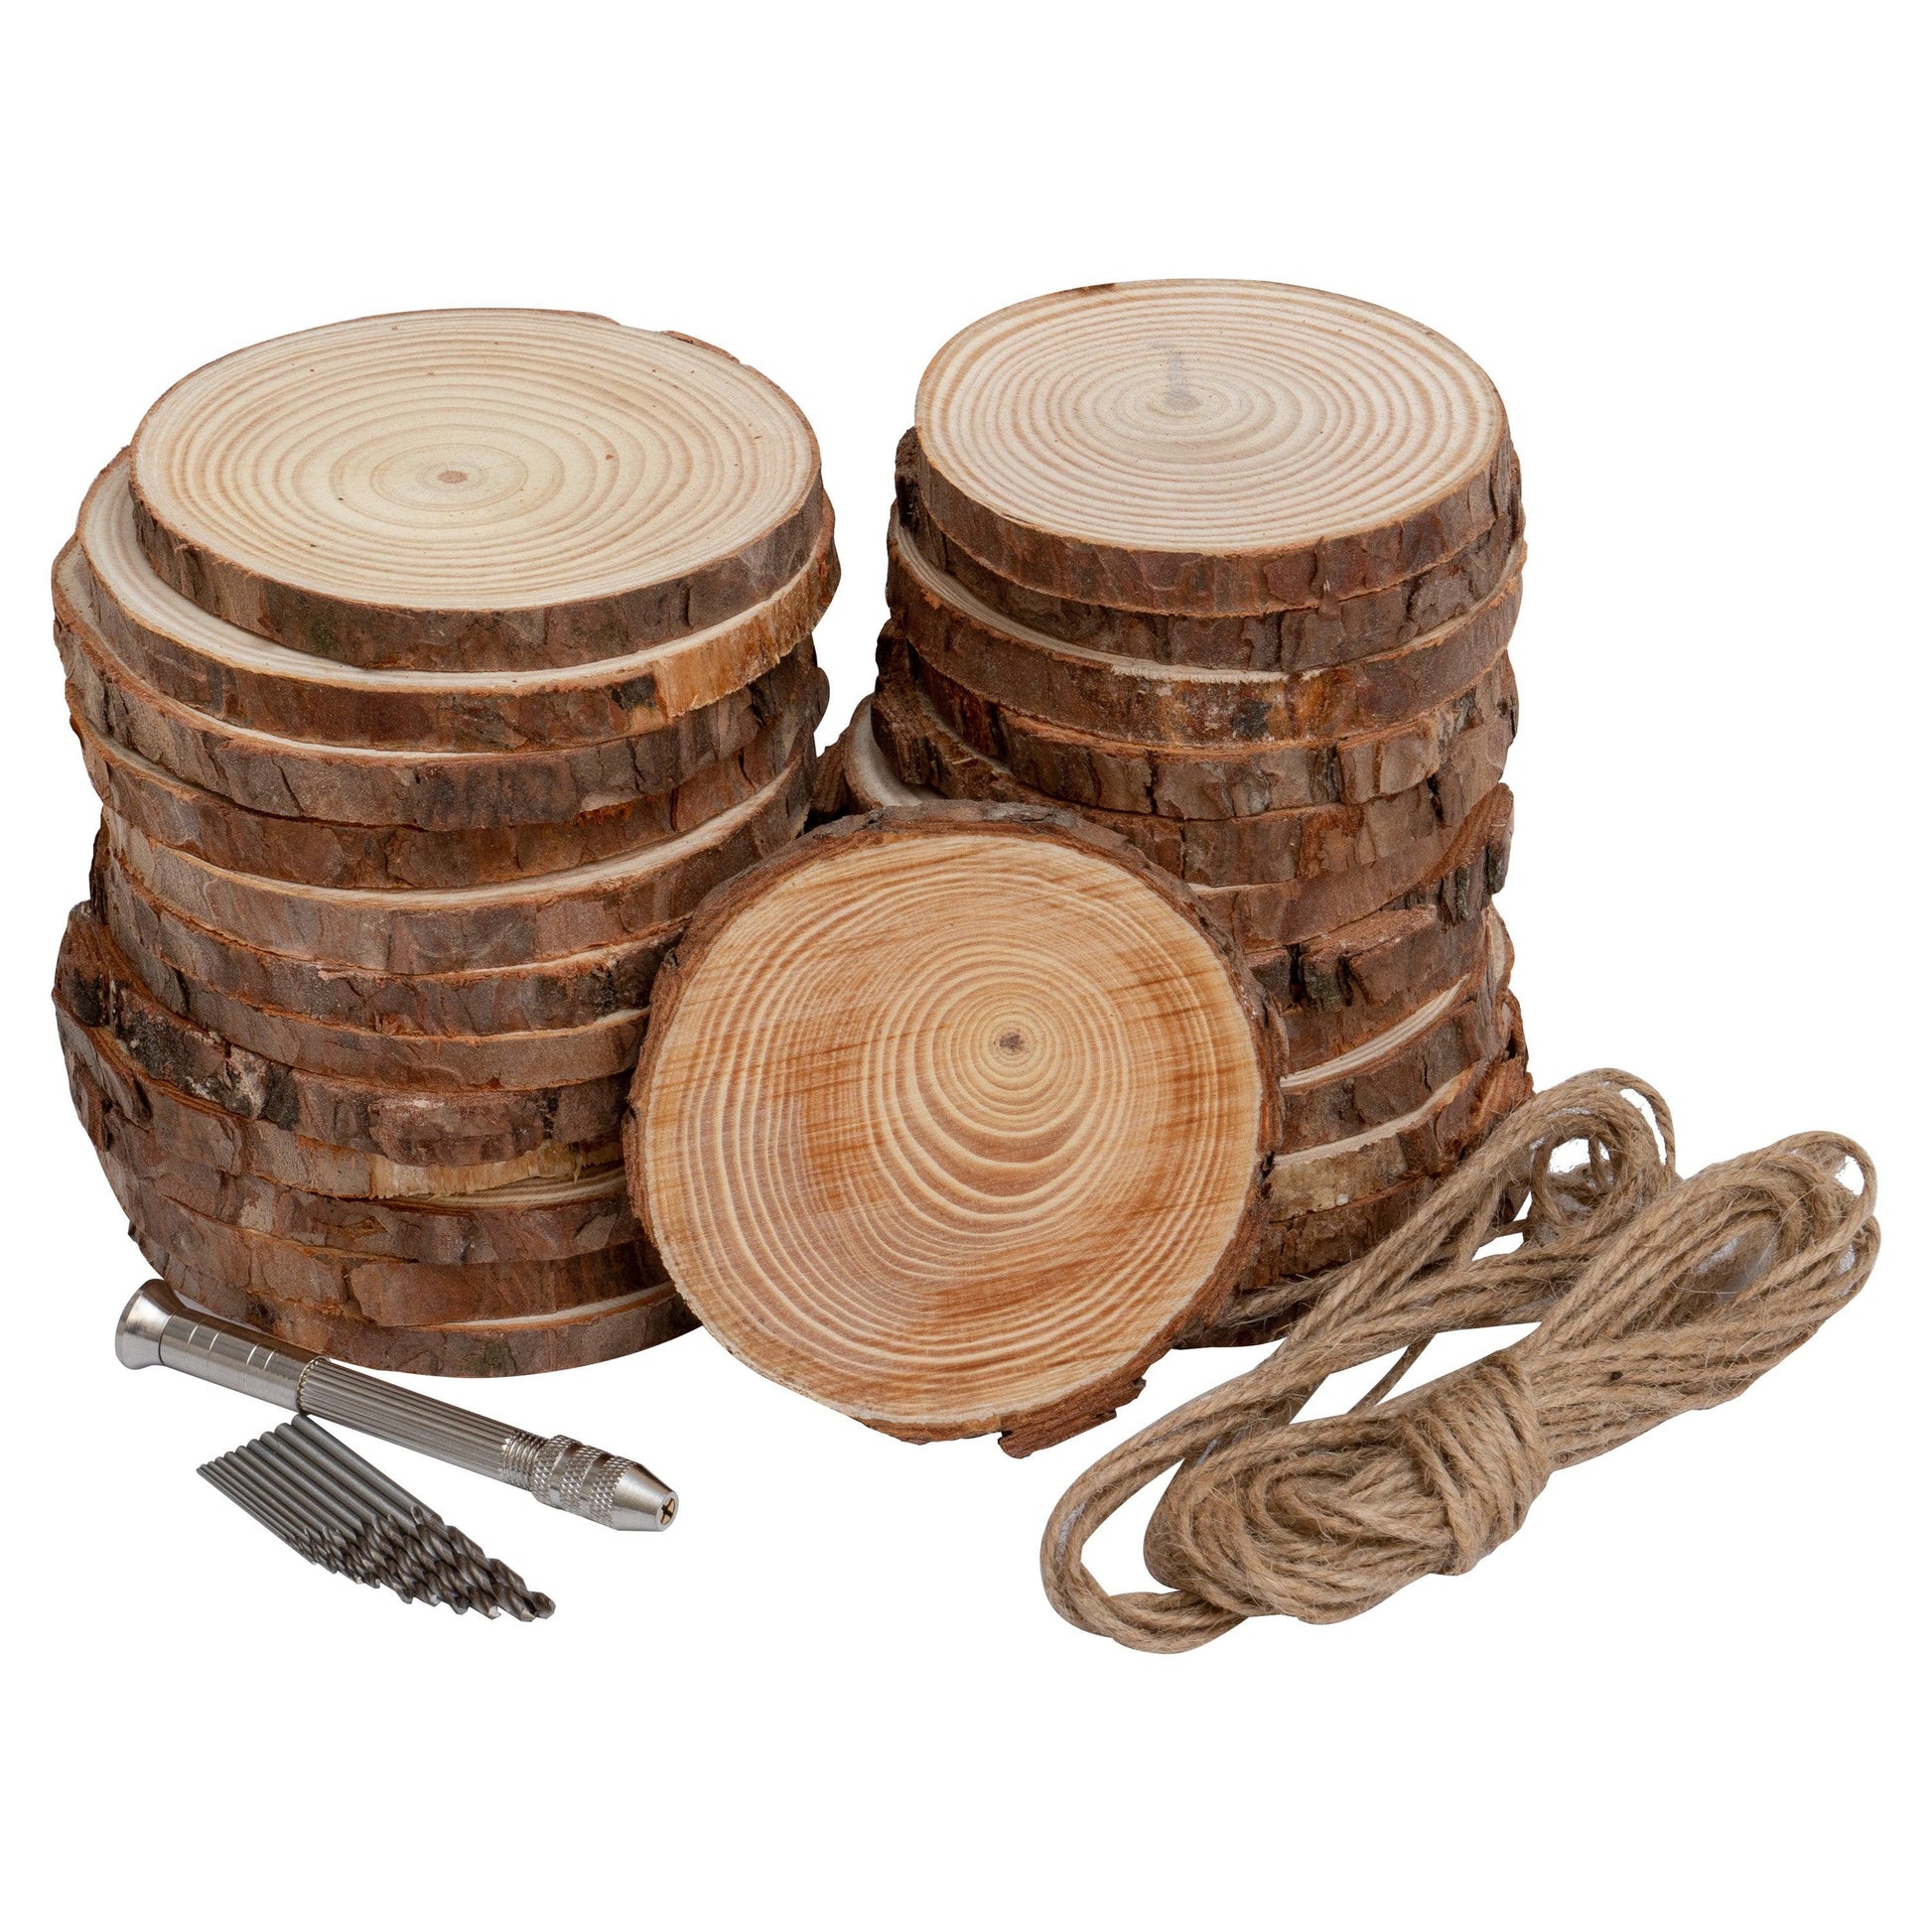 Mr Wood Maker - wooden handmade crafts #wooden #handmade #crafts